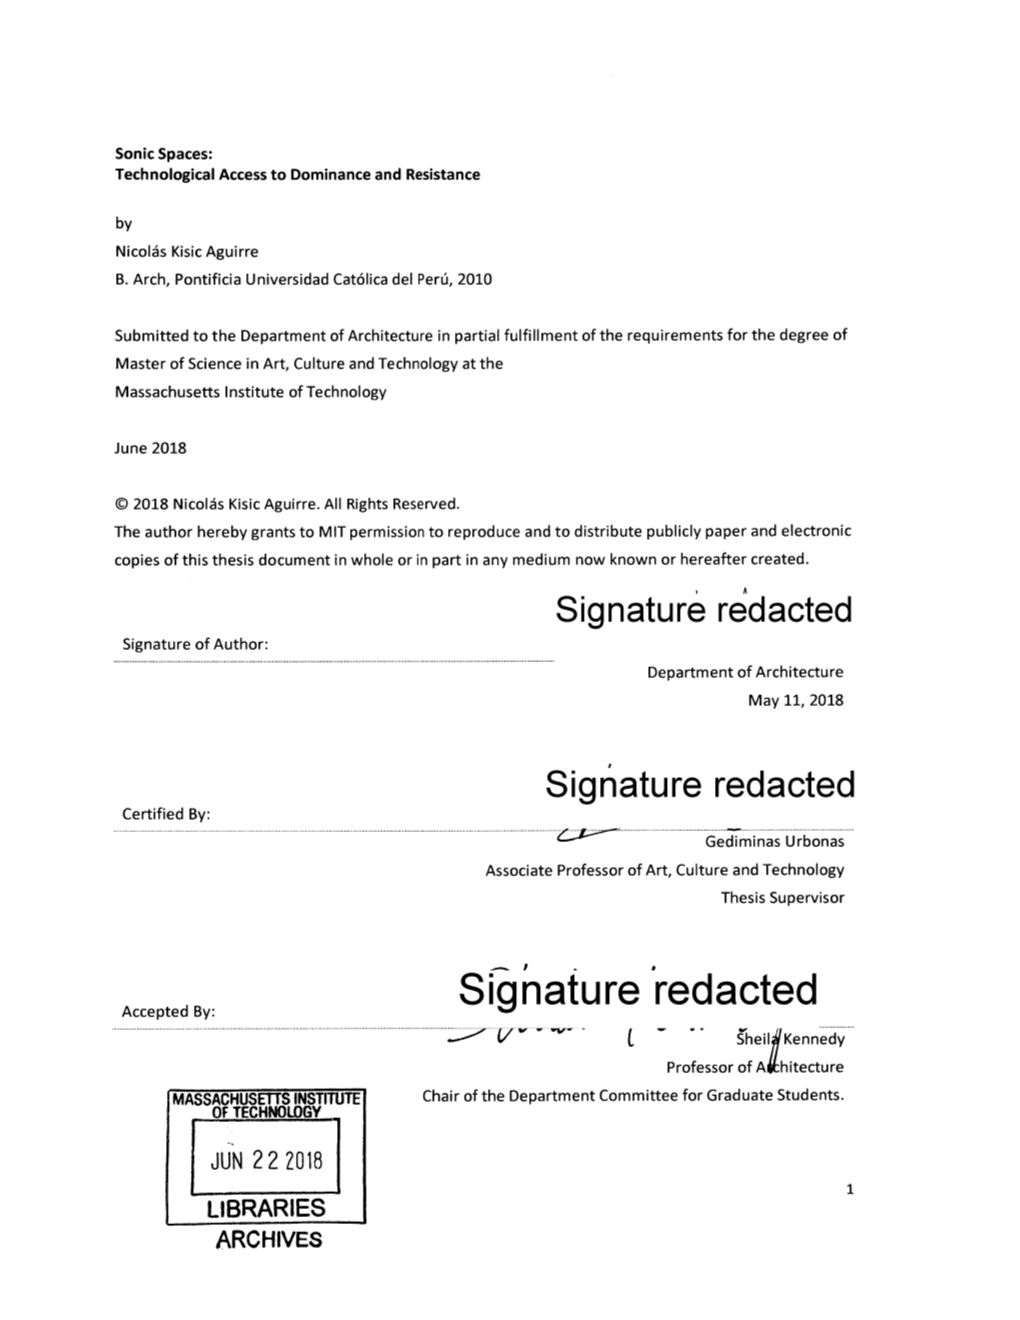 Signature Redacted Signature of Author: Department of Architecture May 11, 2018